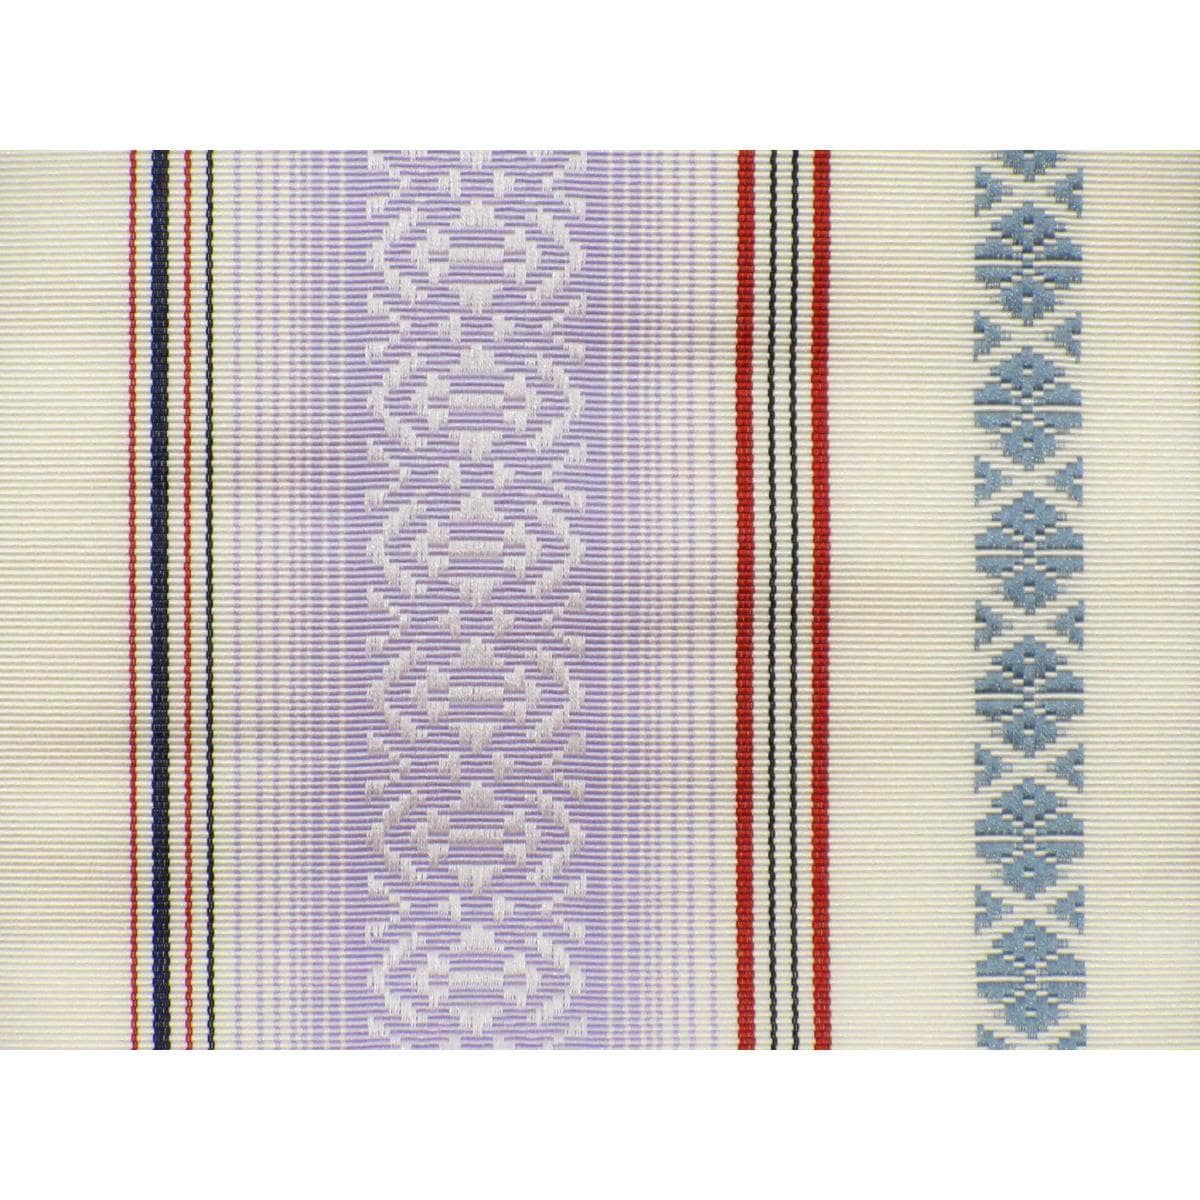 [Unused items] Nagoya obi with Hakataori pattern